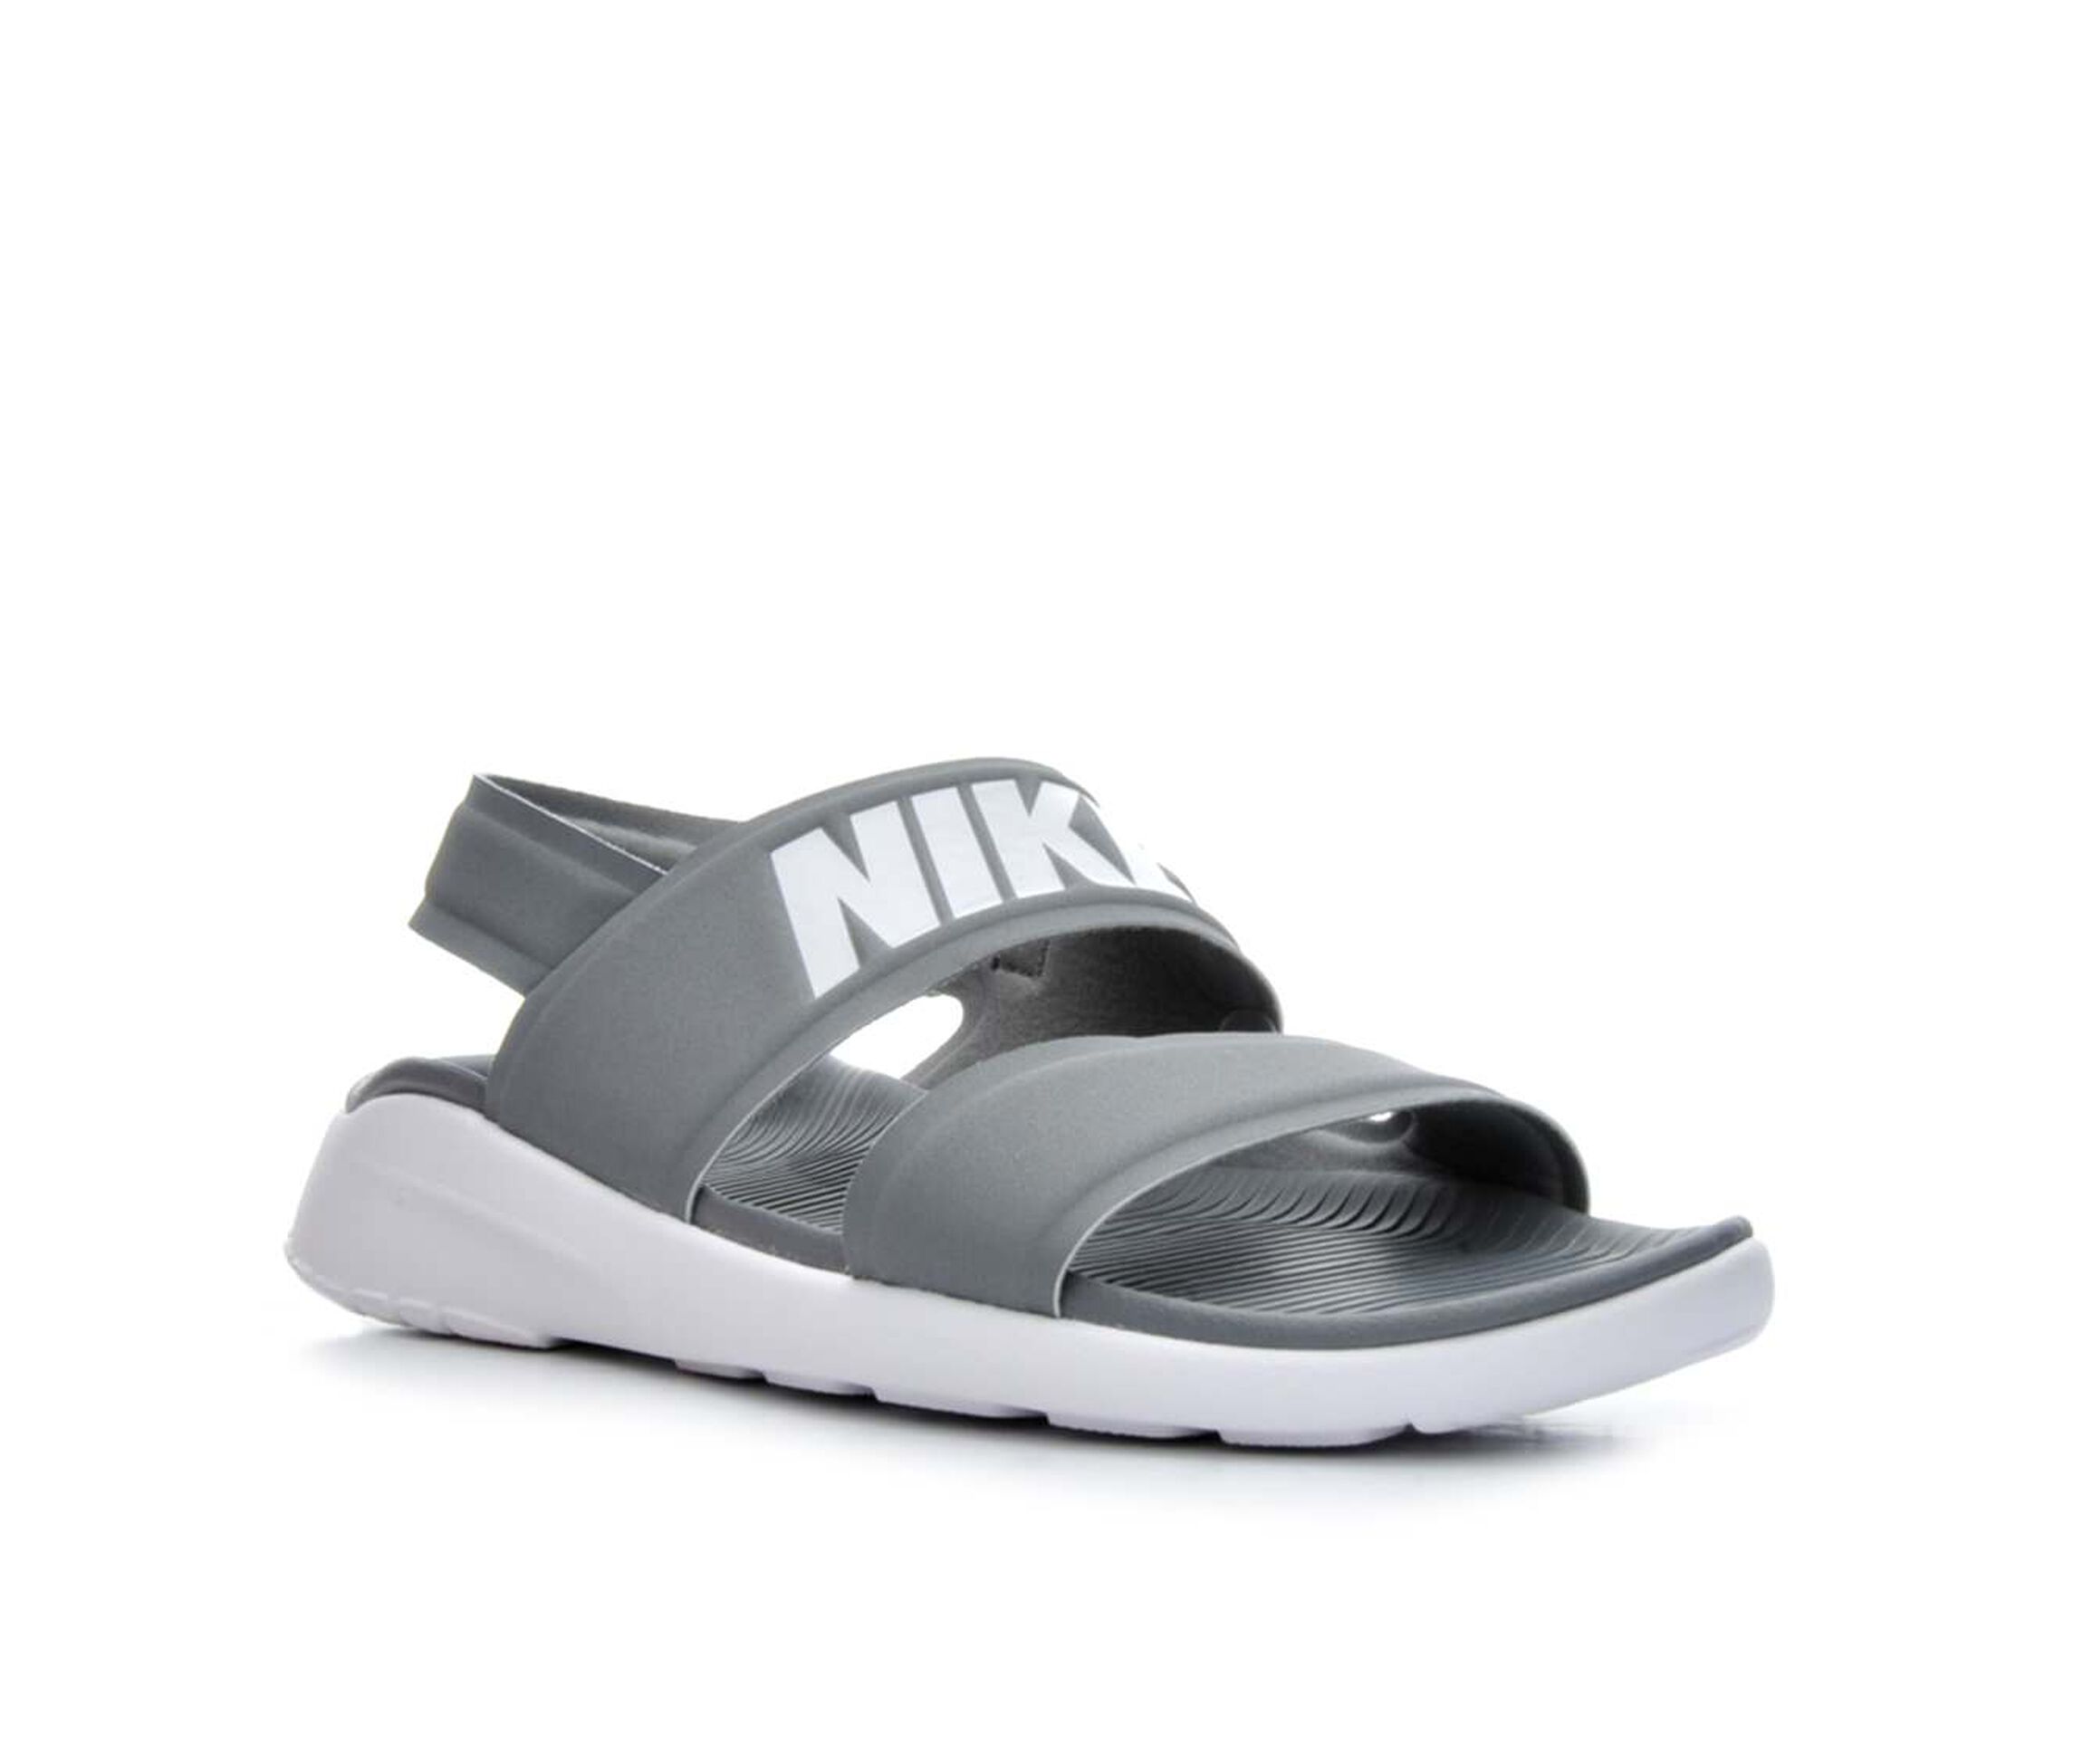 grey nike tanjun sandals